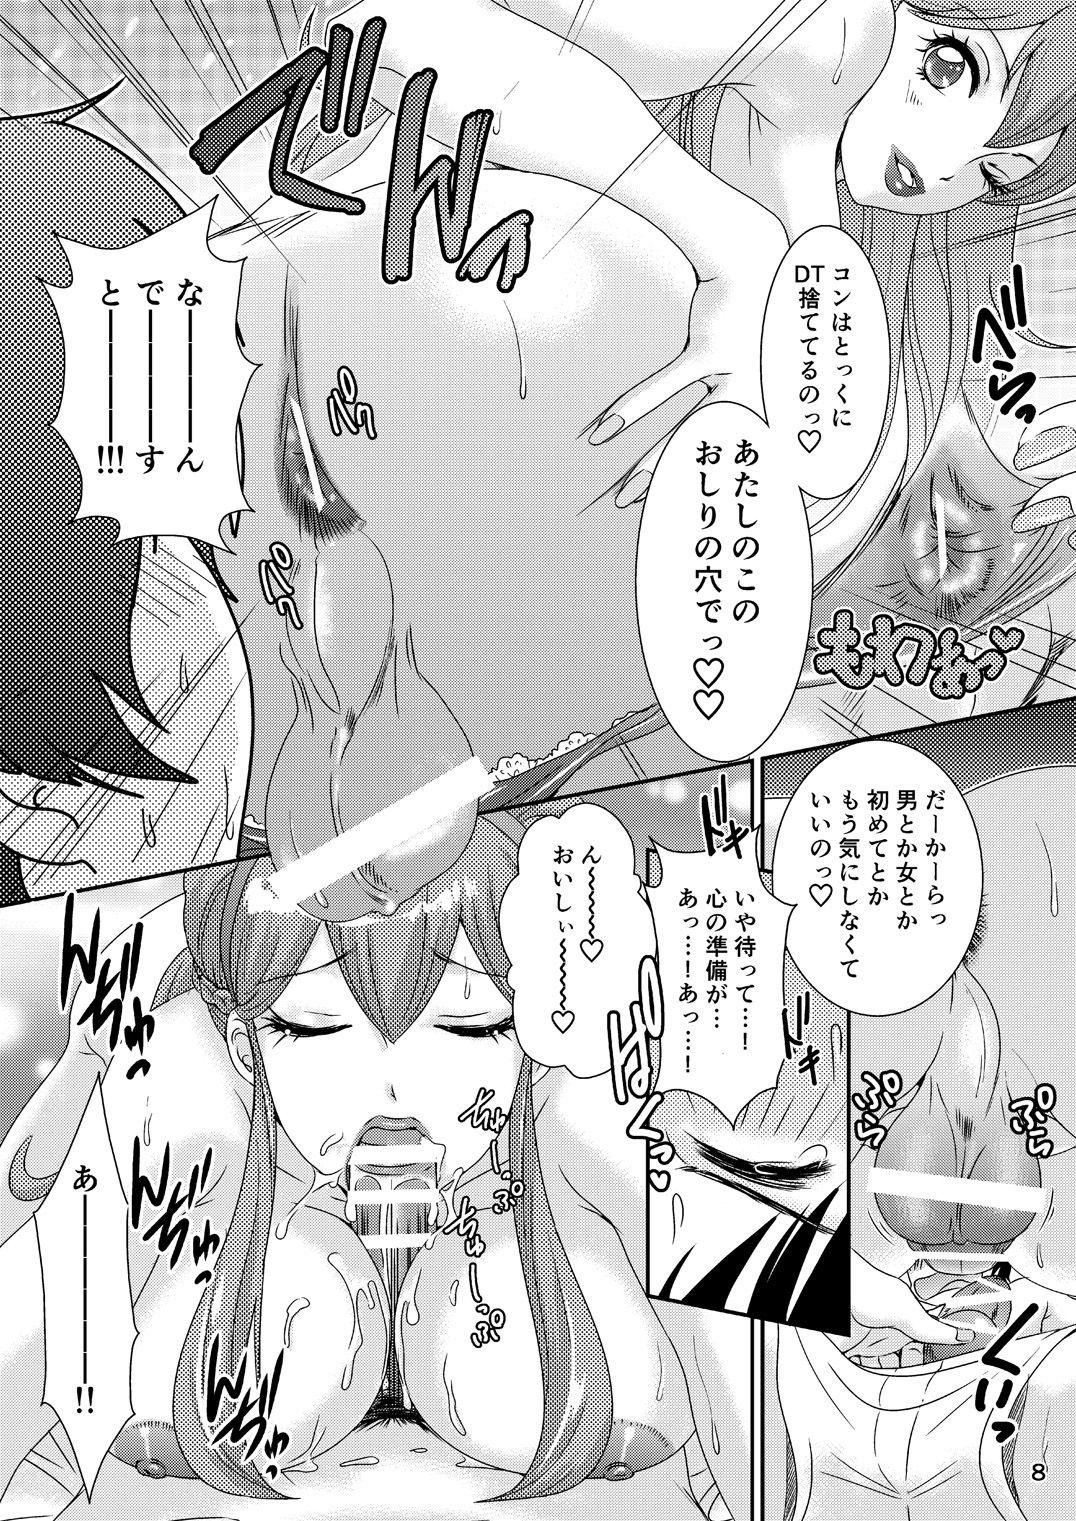 Monster BEHAVIOR+5 ~ IXION SAGA not DT! - Ixion saga dt Porn - Page 7